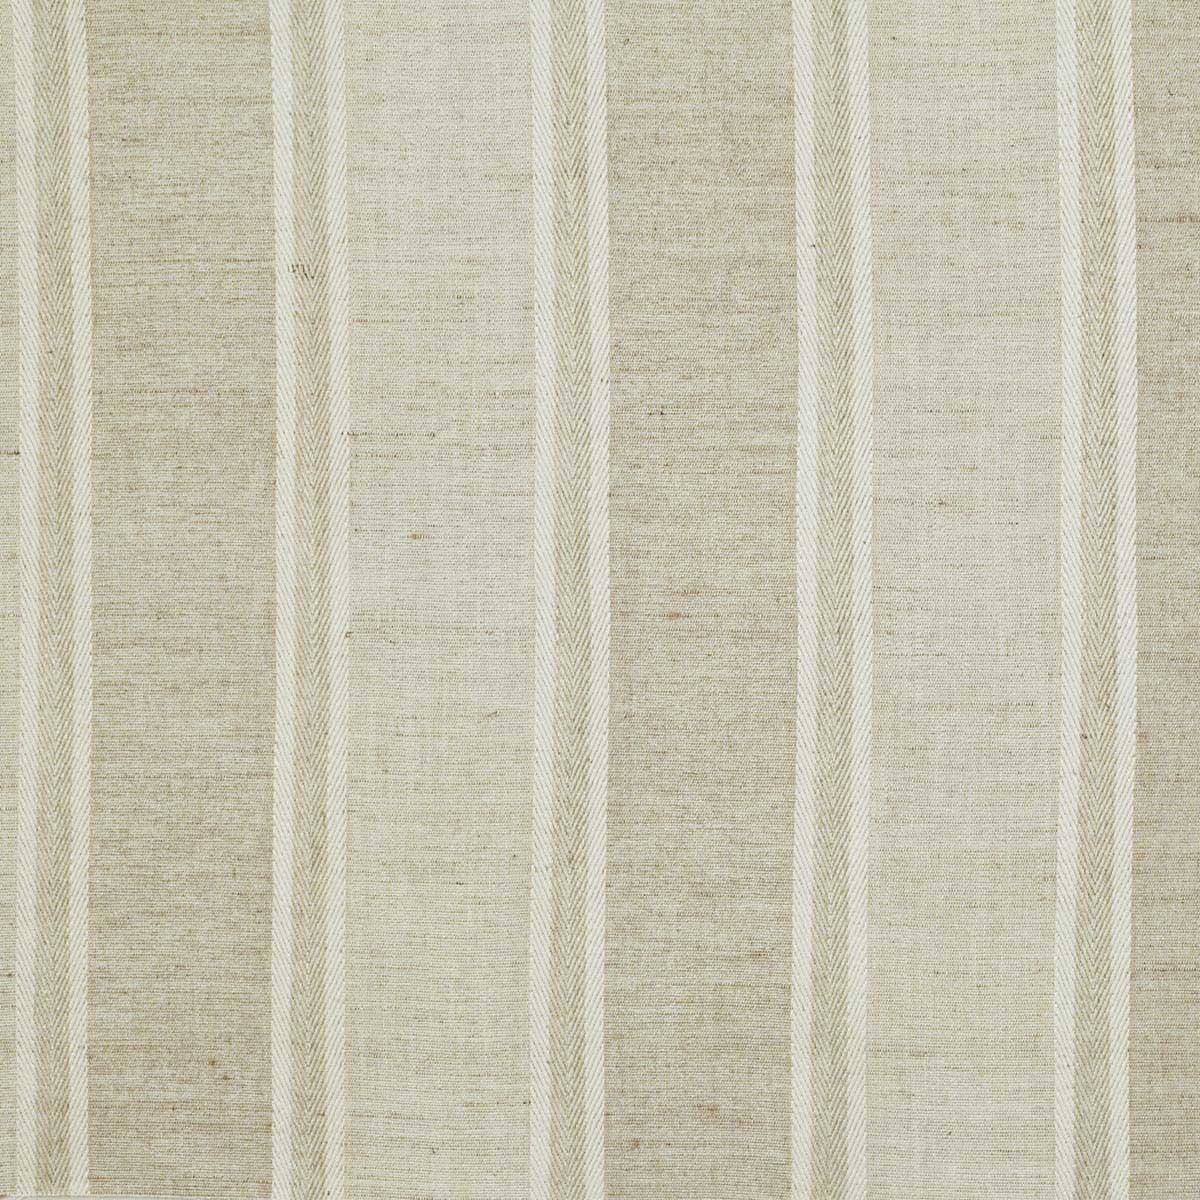 P-Laome/Flax – Fabric